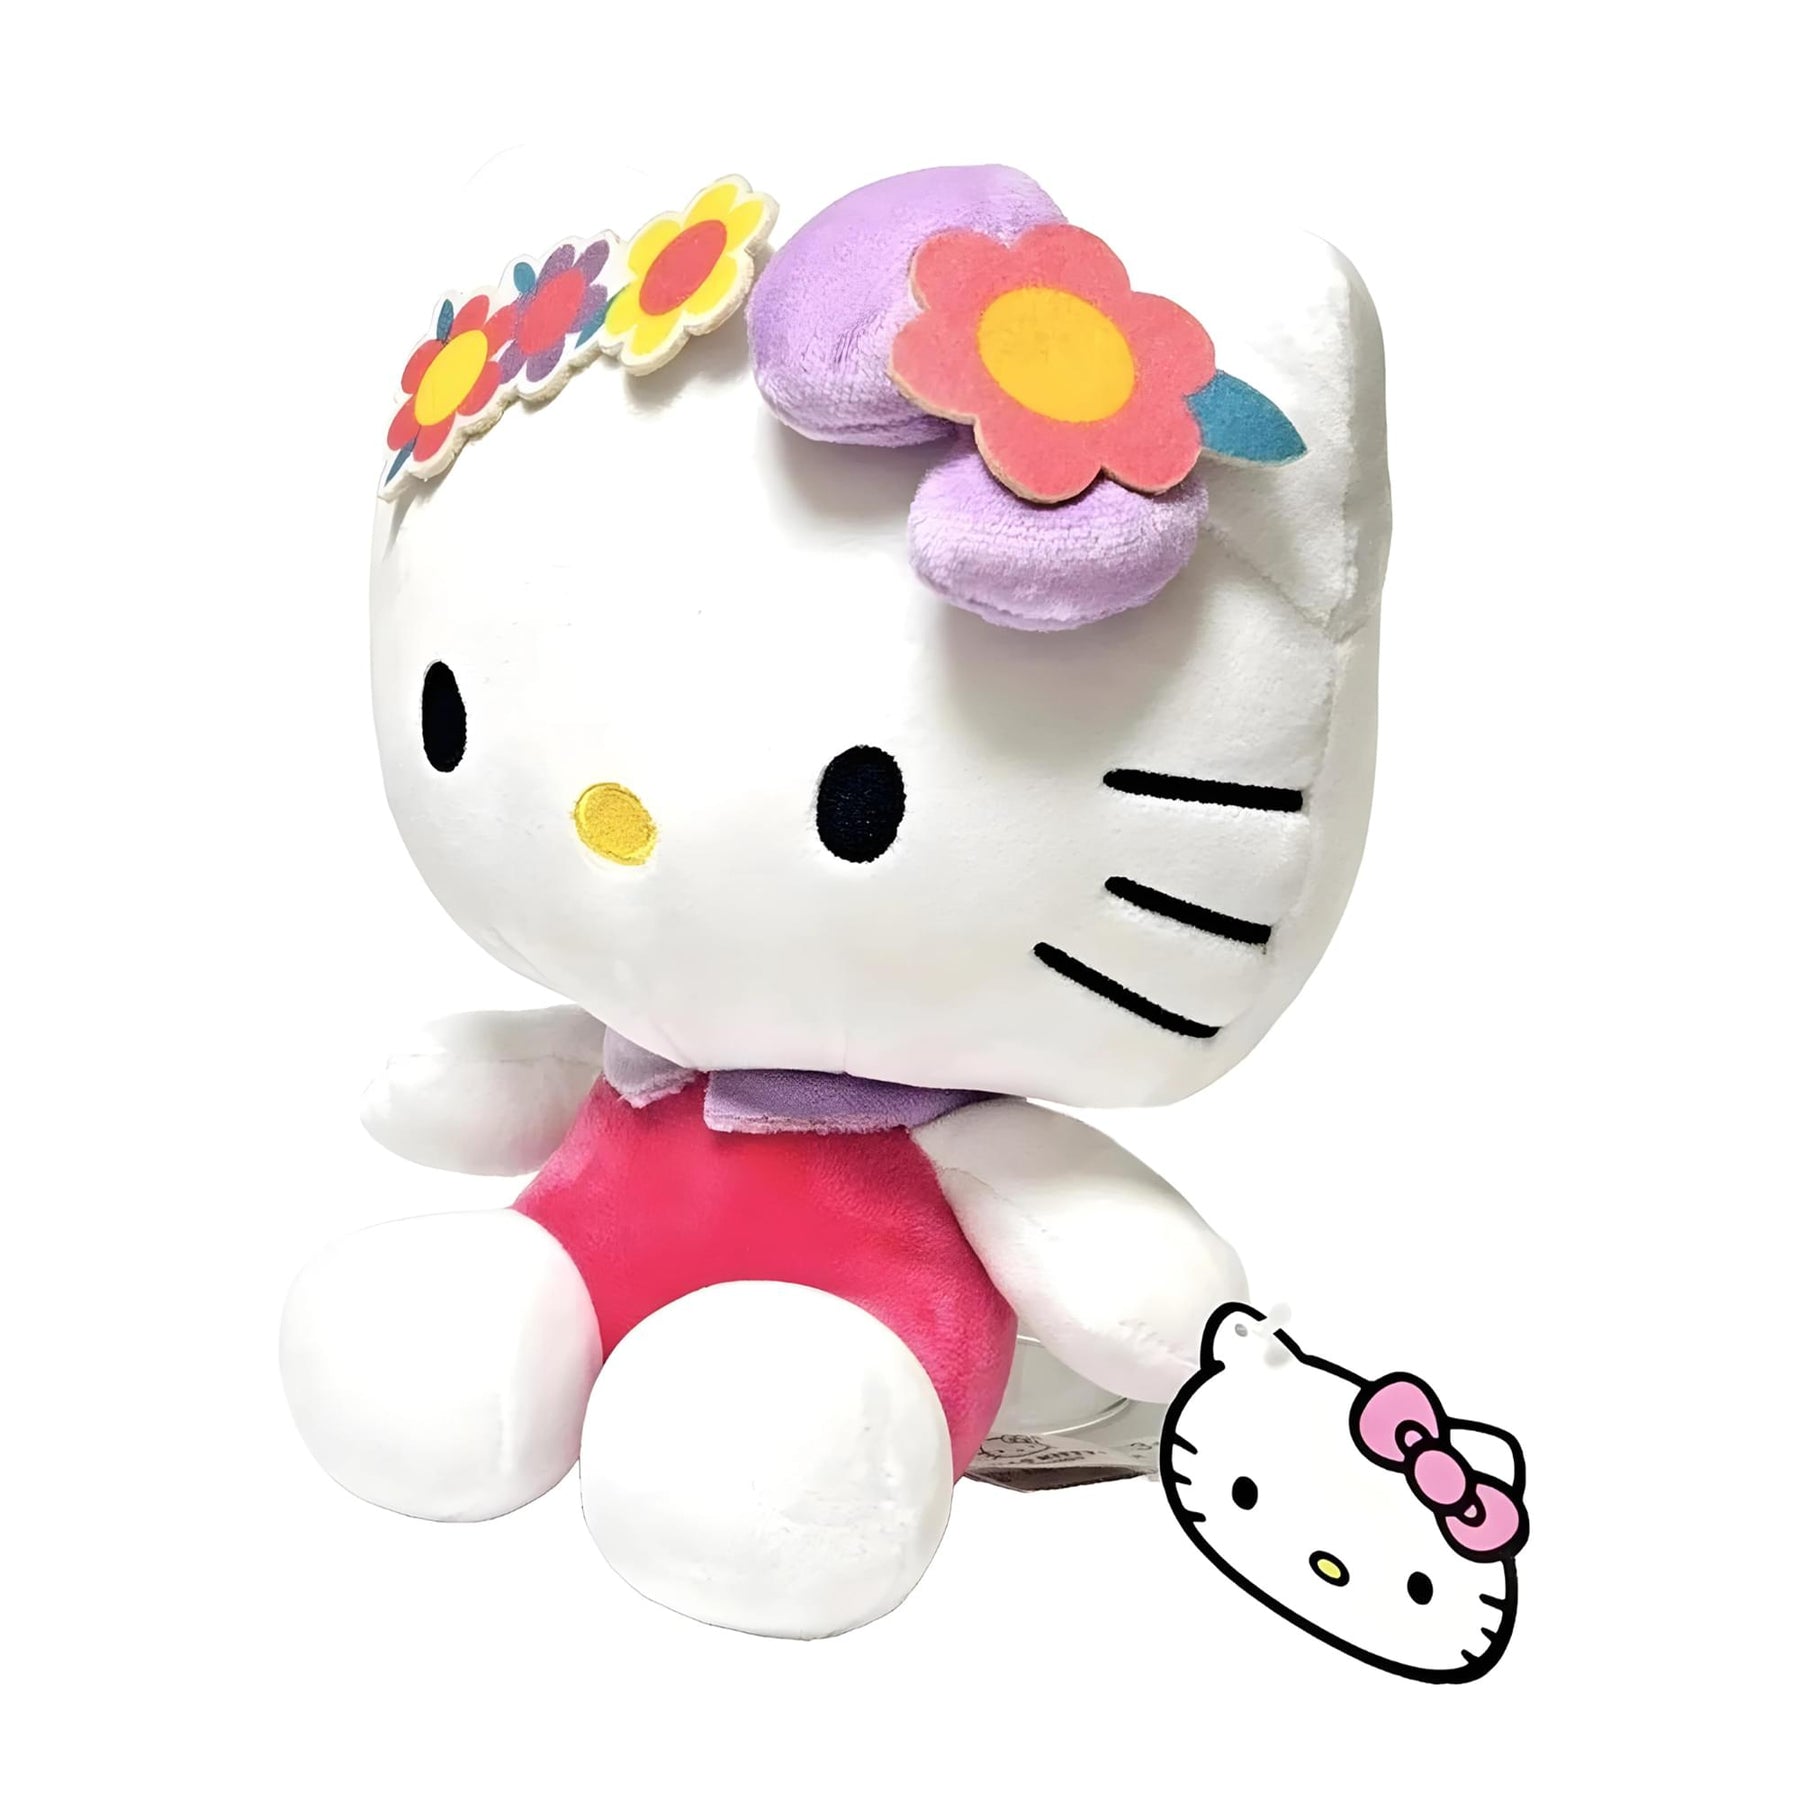 Sanrio Hello Kitty With Flower Headband 8.5 Inch Plush